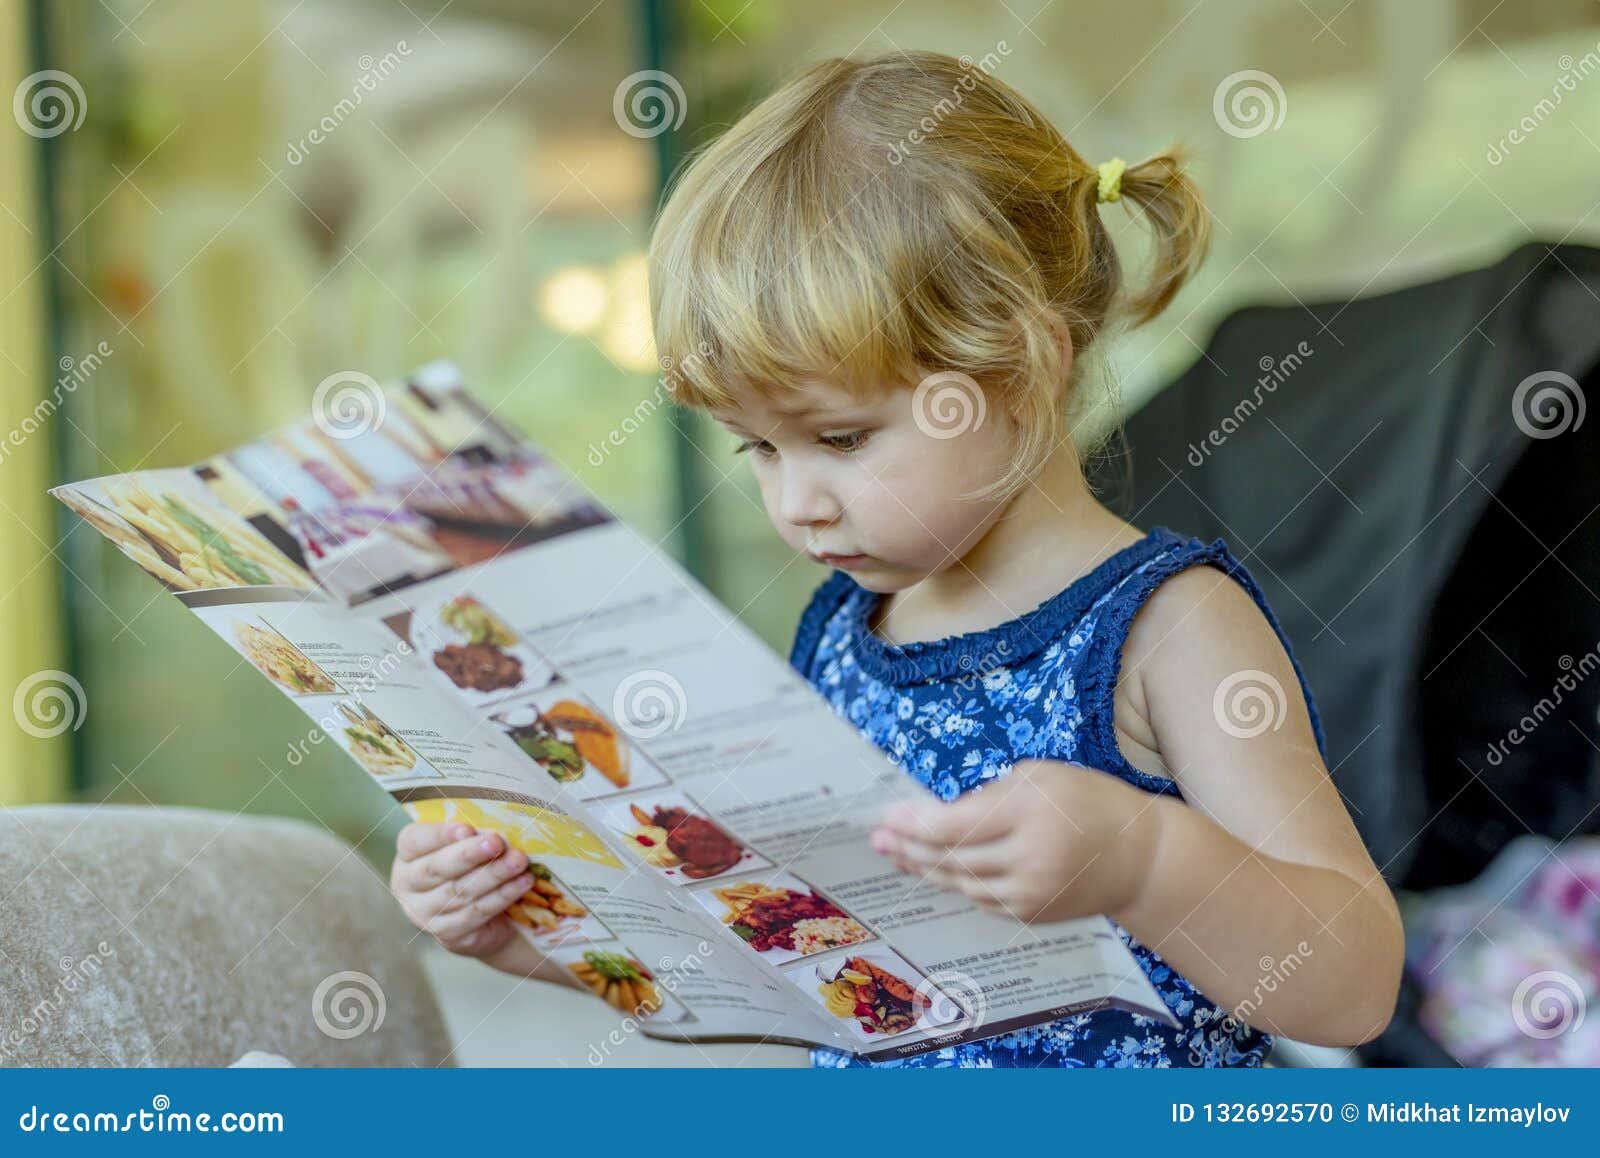 young girl reading menu